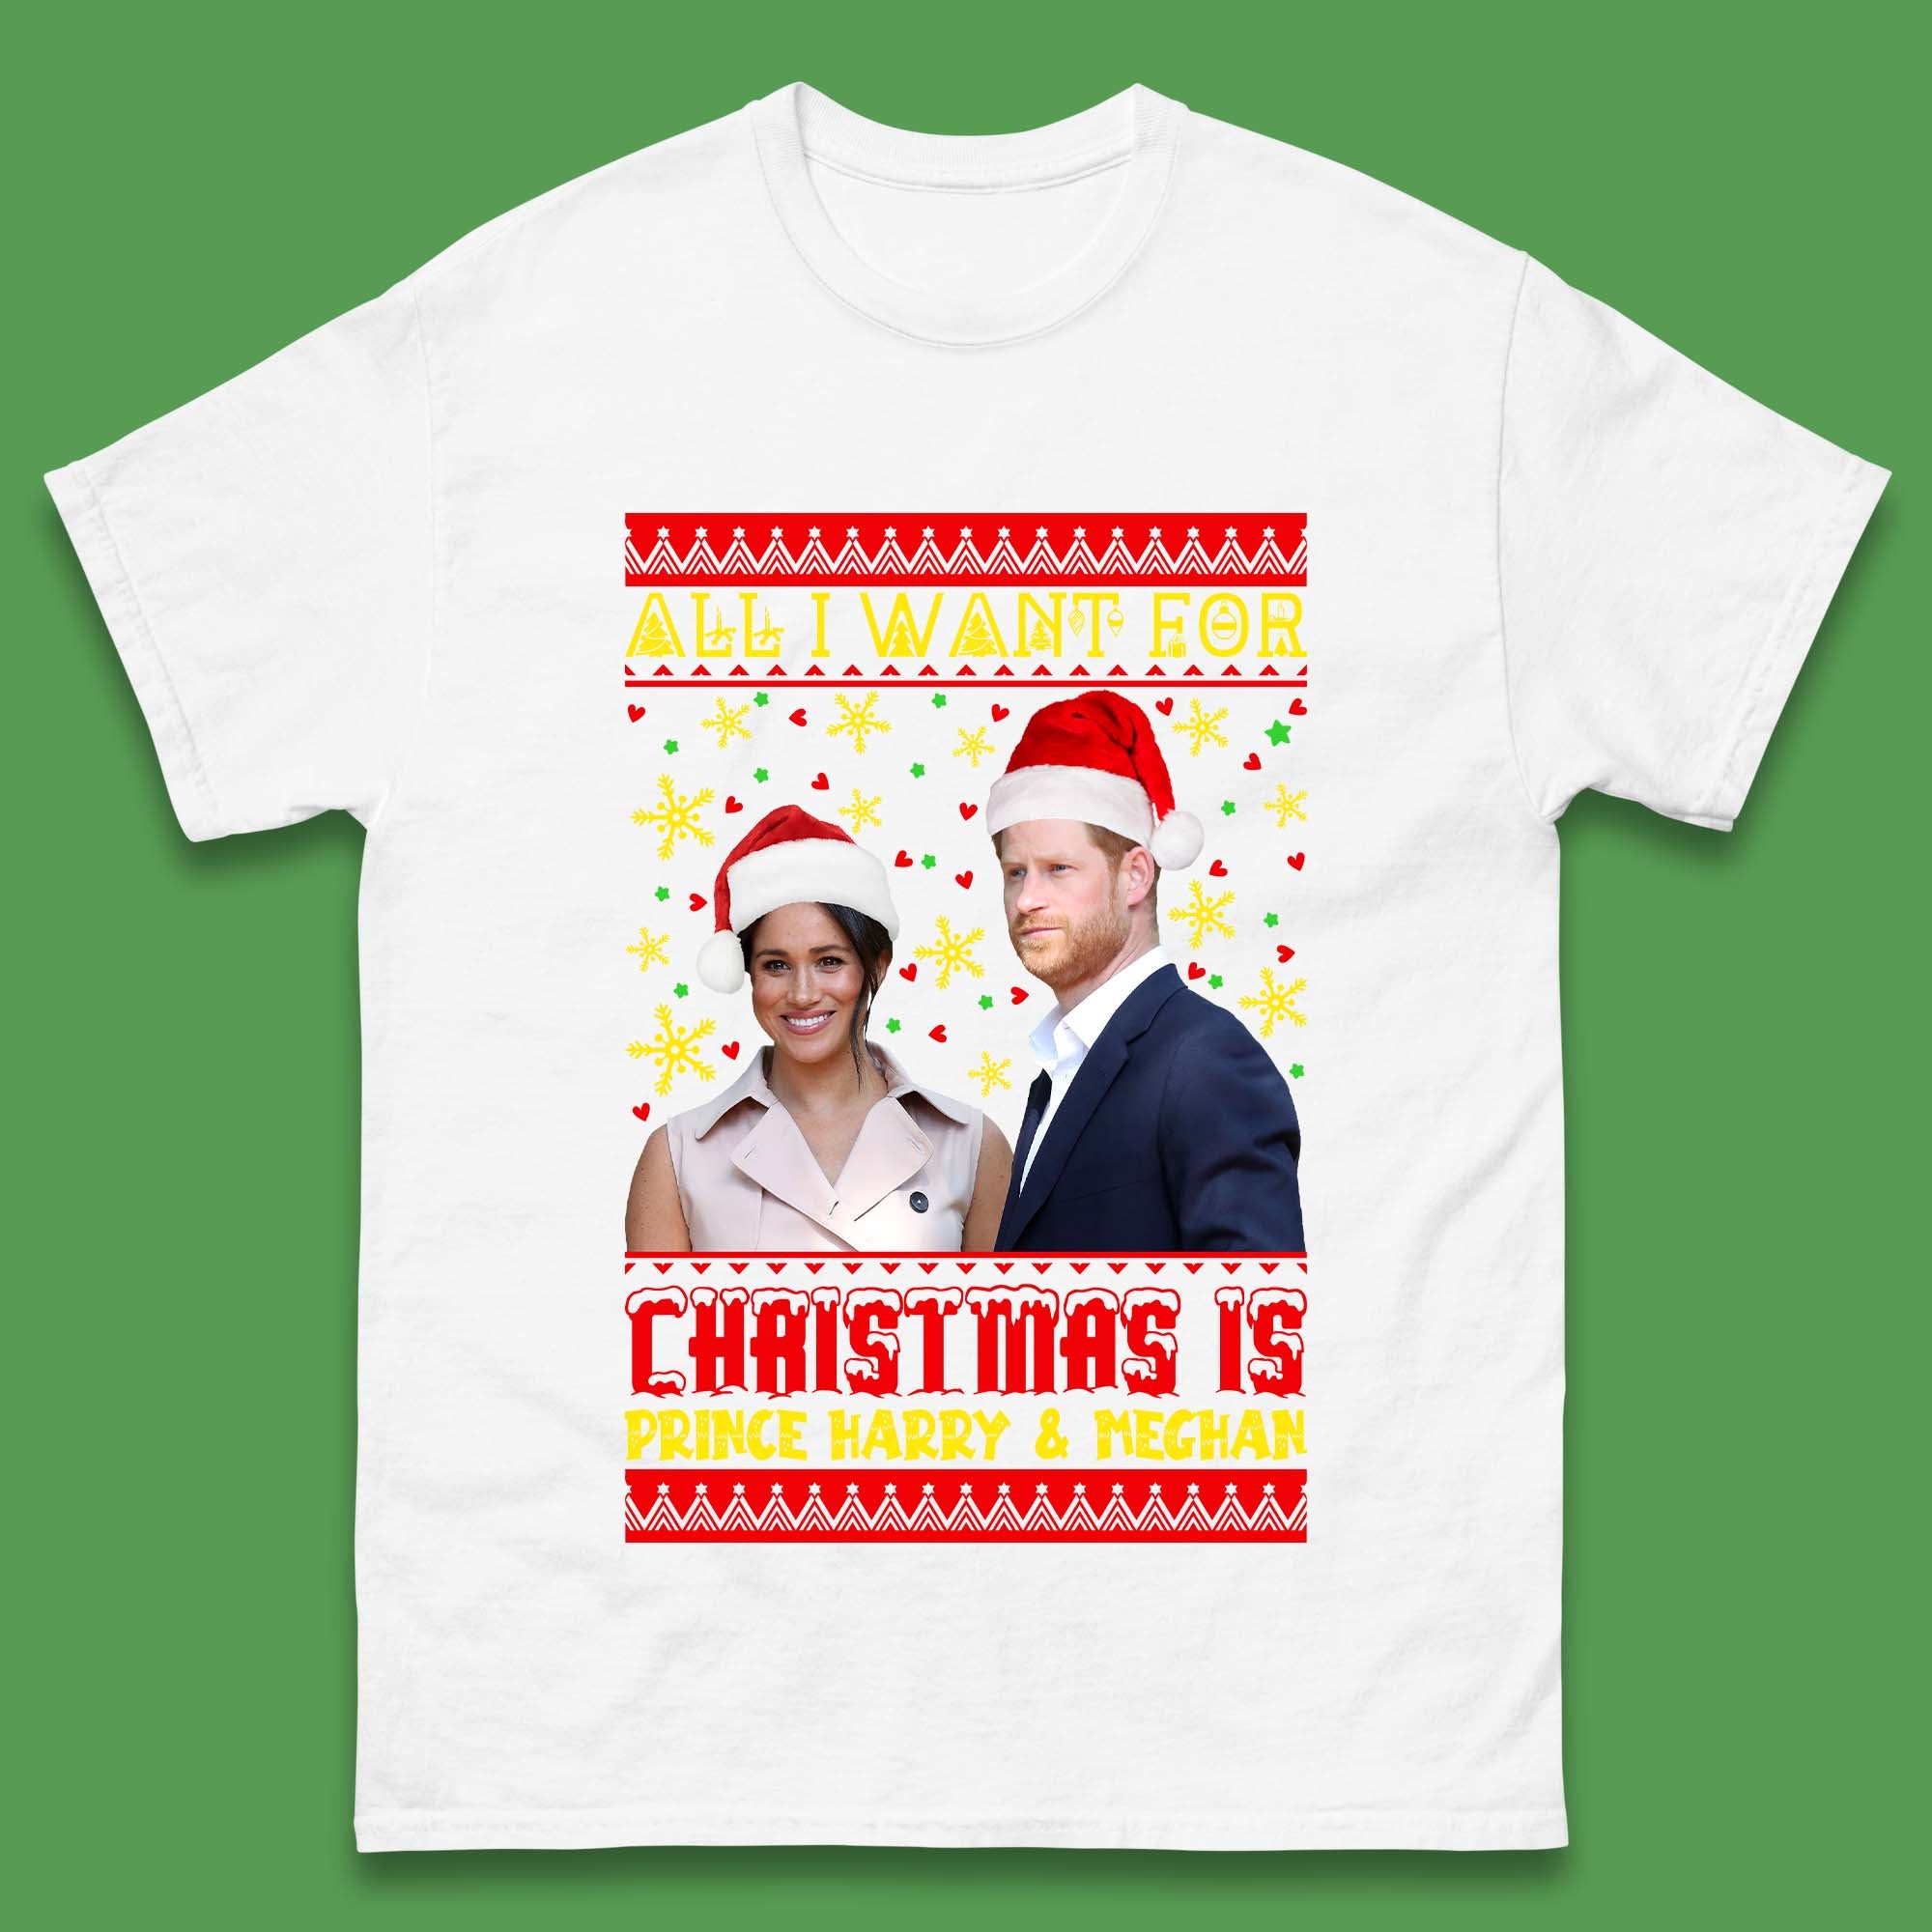 Prince Harry & Meghan Christmas Mens T-Shirt